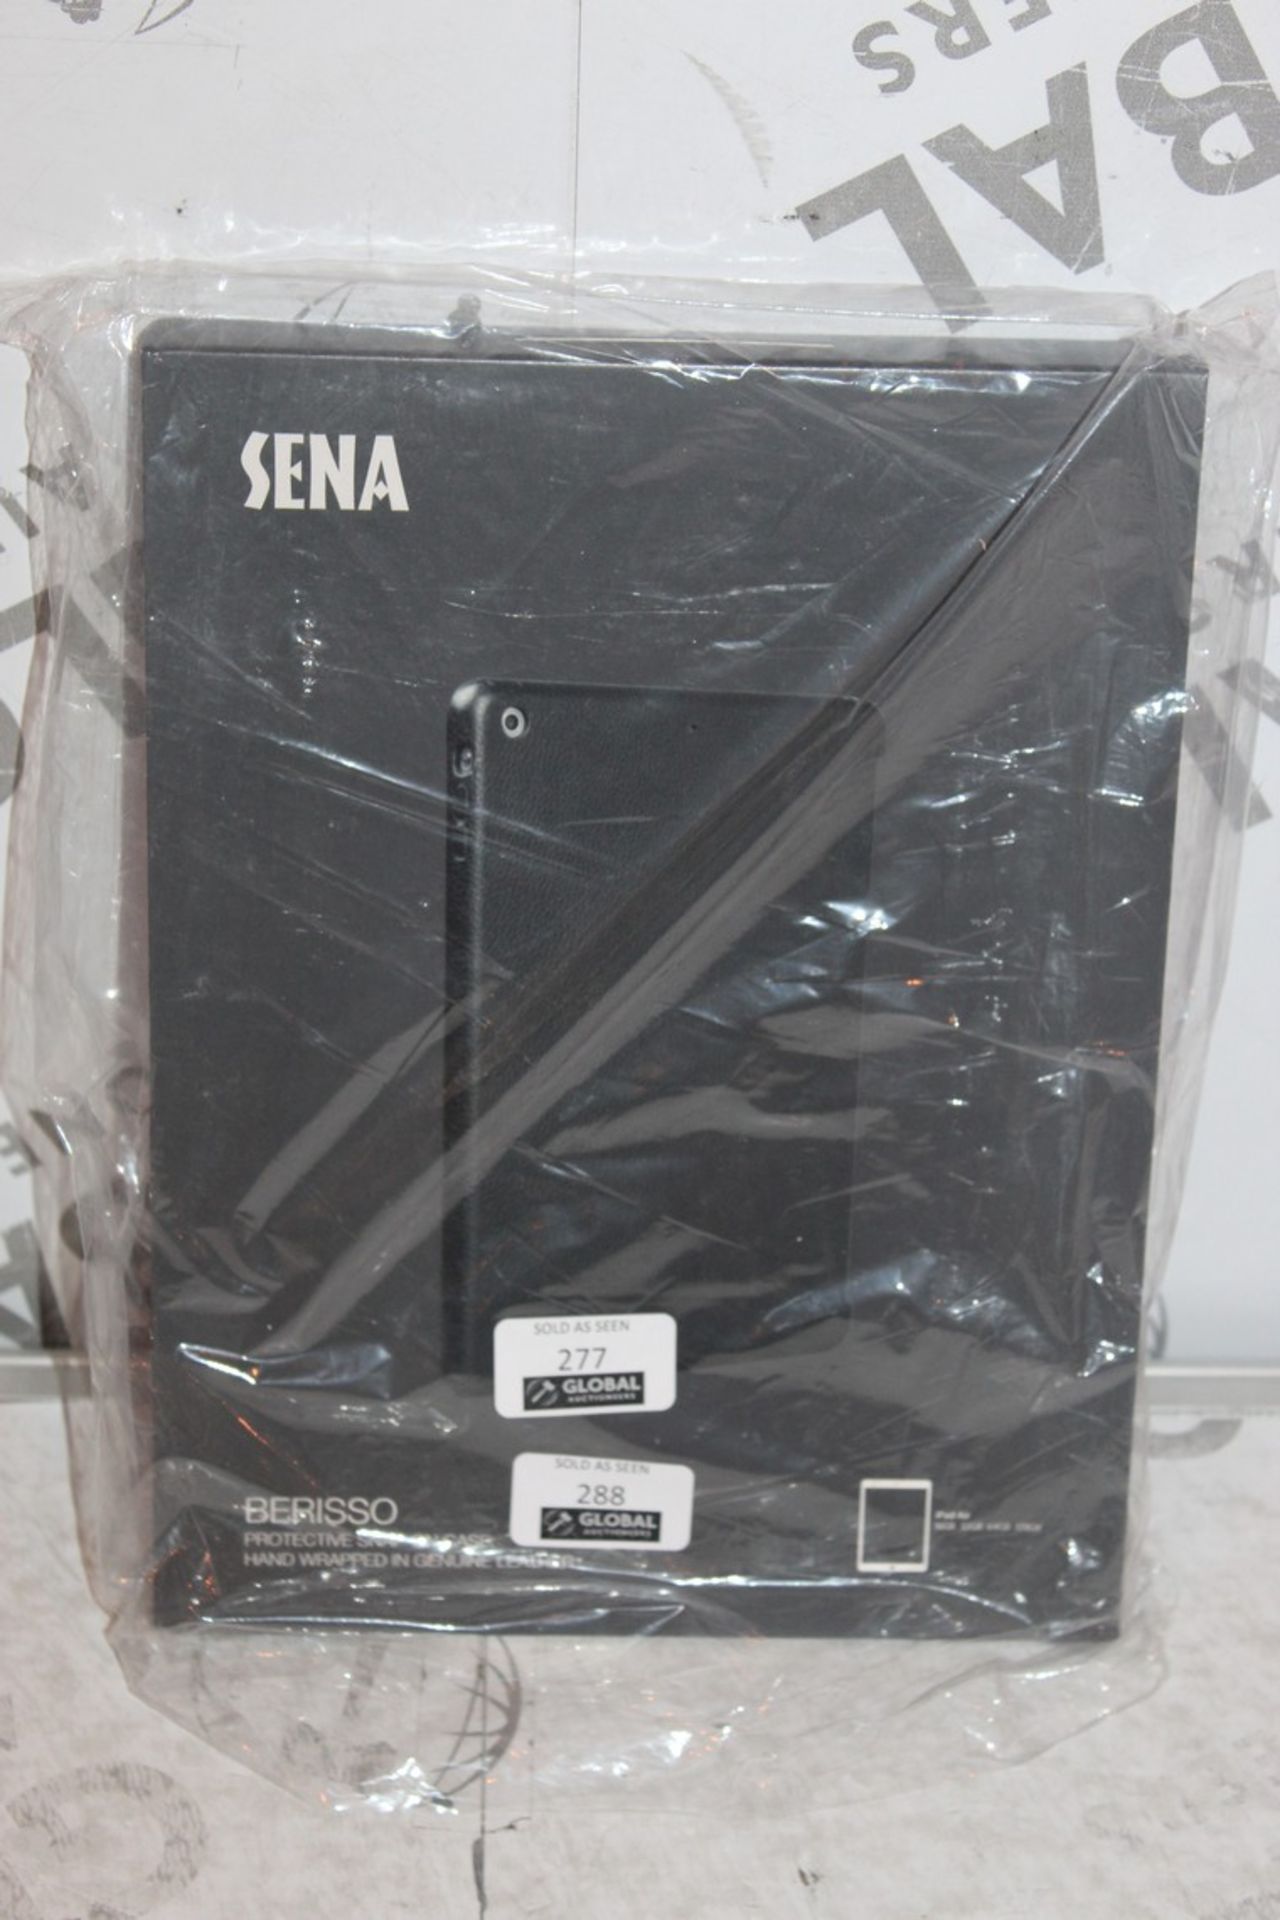 Boxed, Sena Berisso, iPad Air Case, RRP£60.00